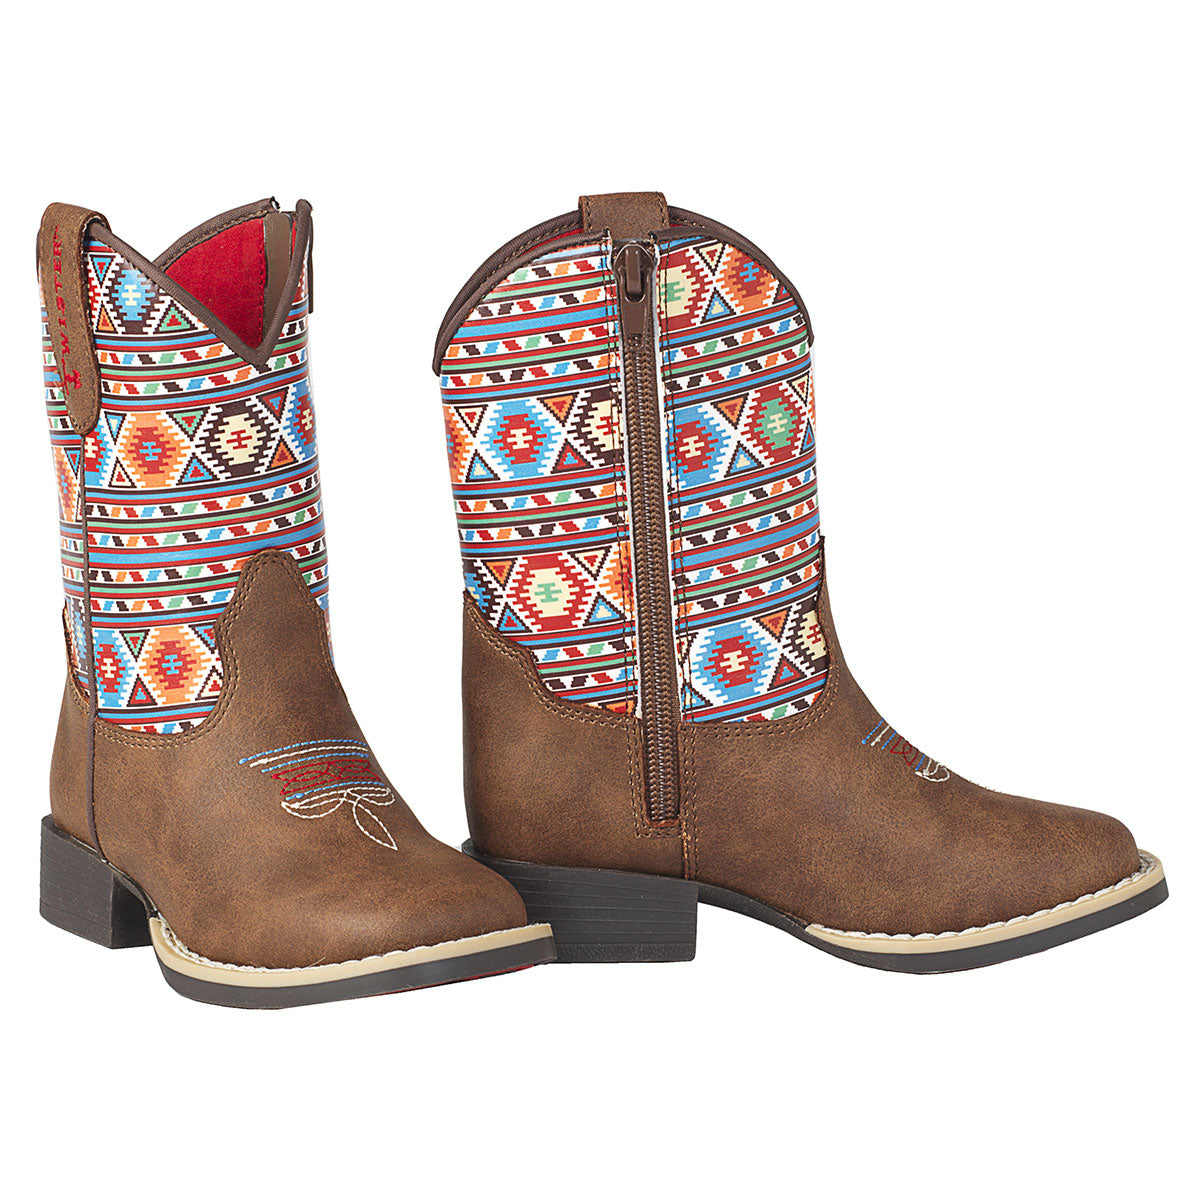 Twister Toddler Daniella Western Boots w/ Zipper Access - Multi Aztec/Brown